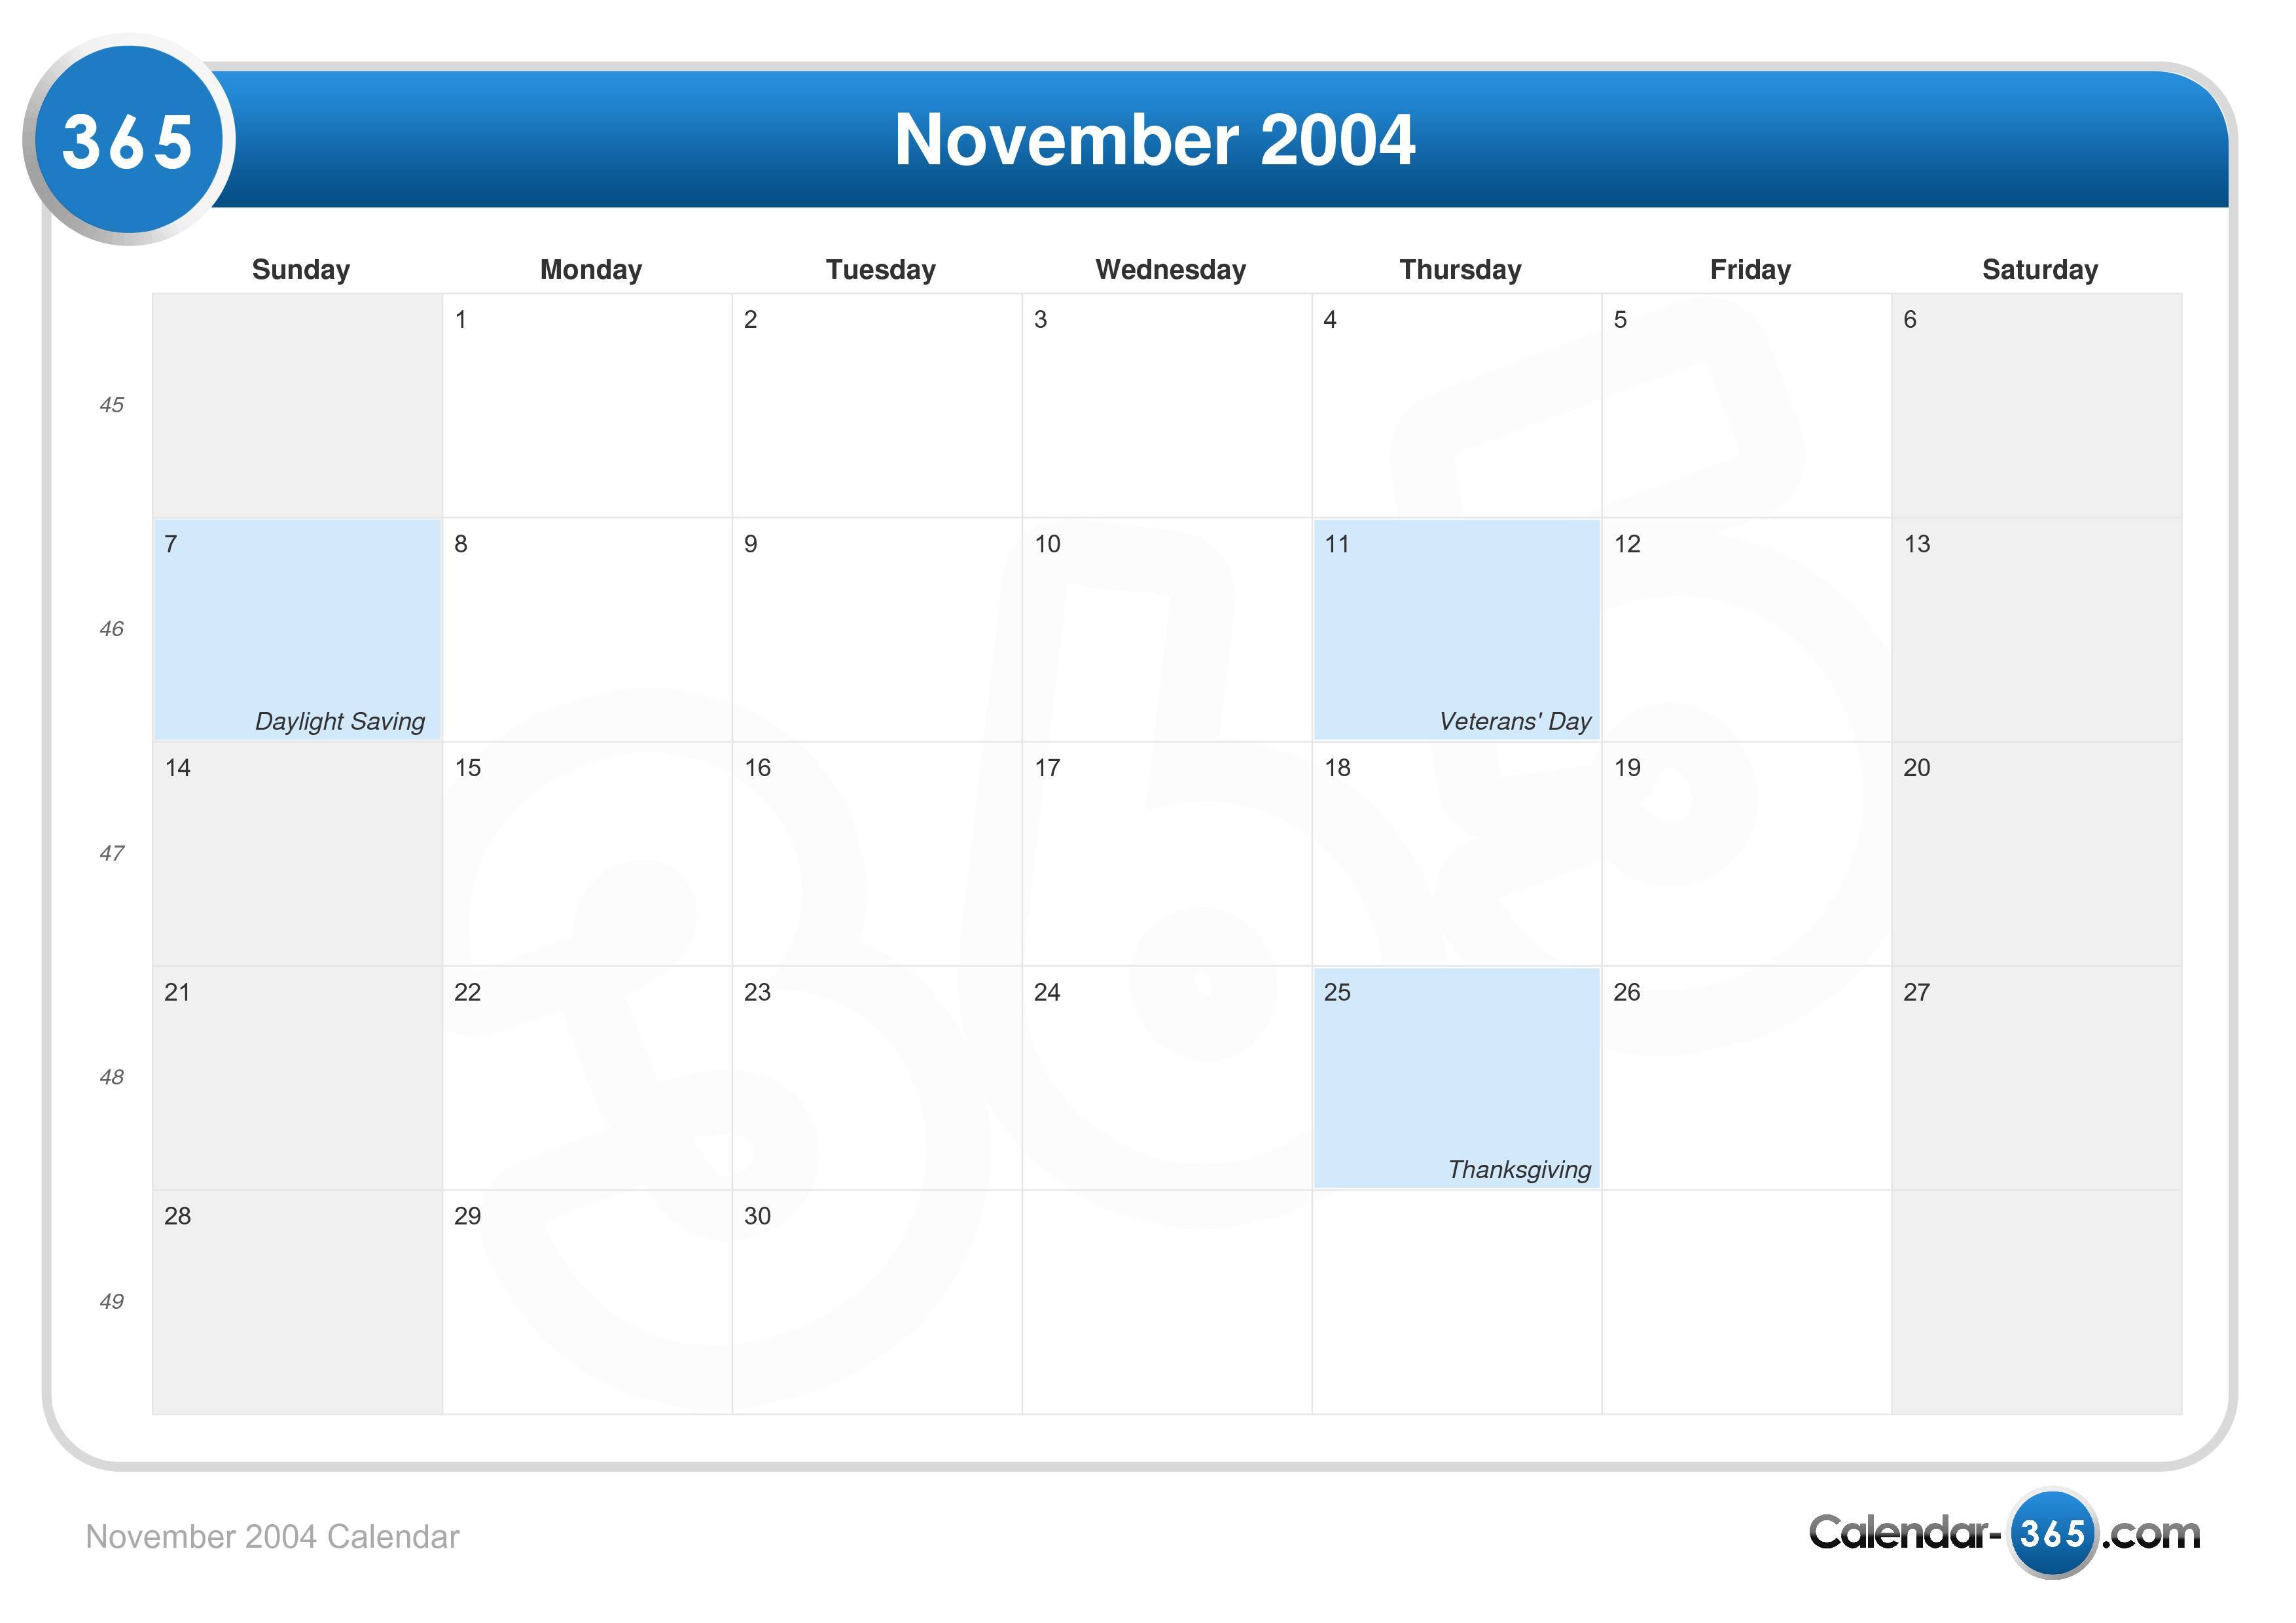 November kalender 2004 Astronomy Picture